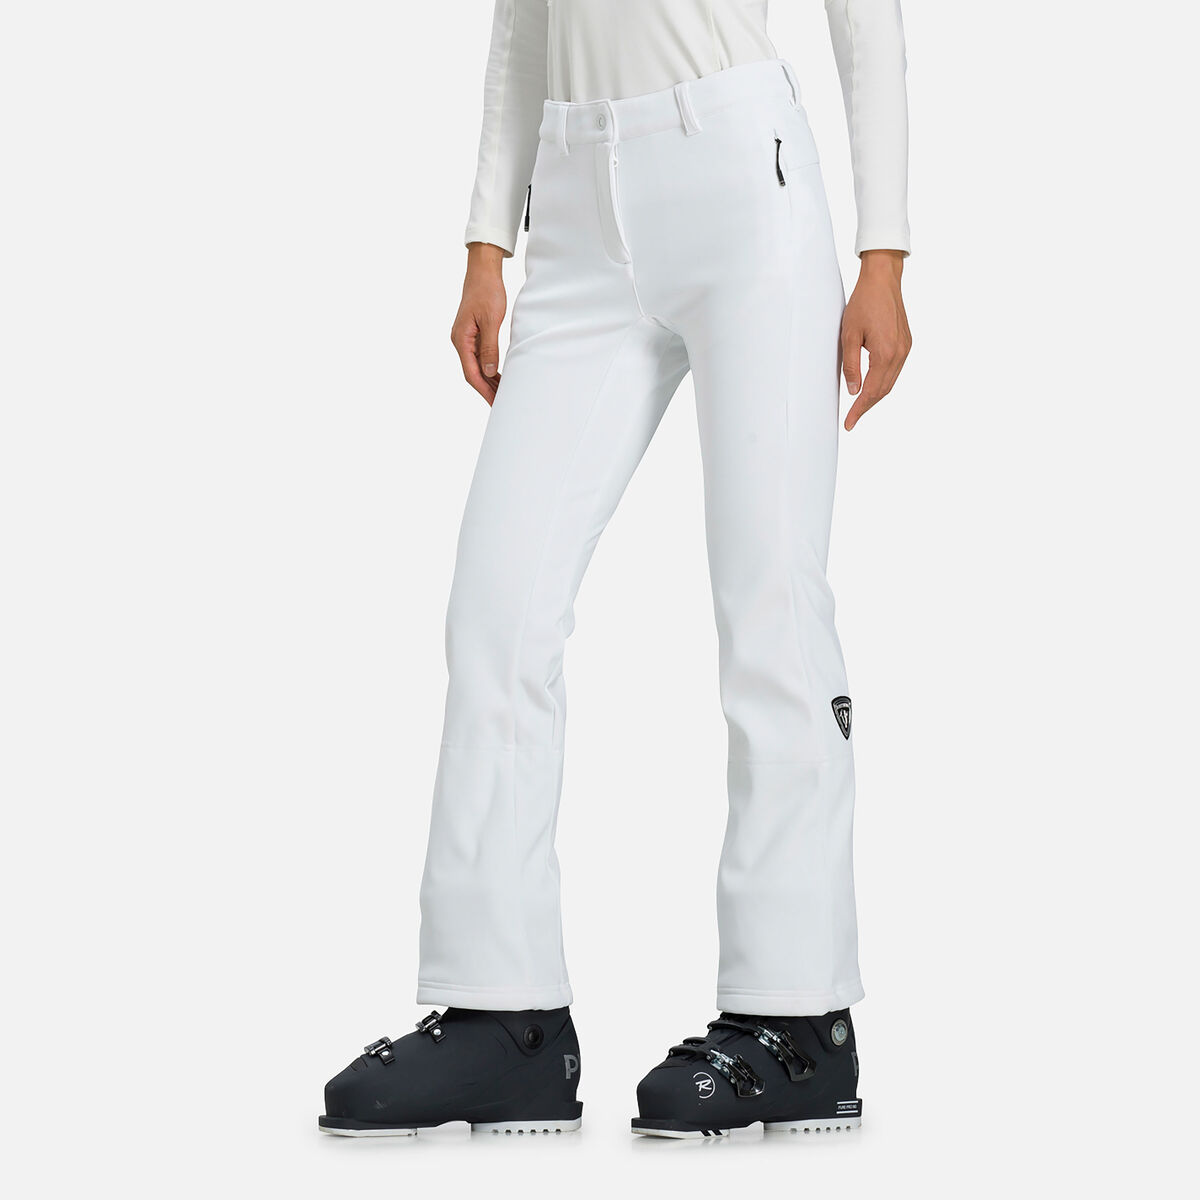 Rossignol Women's Rapide Ski Pants, Ski Pants White